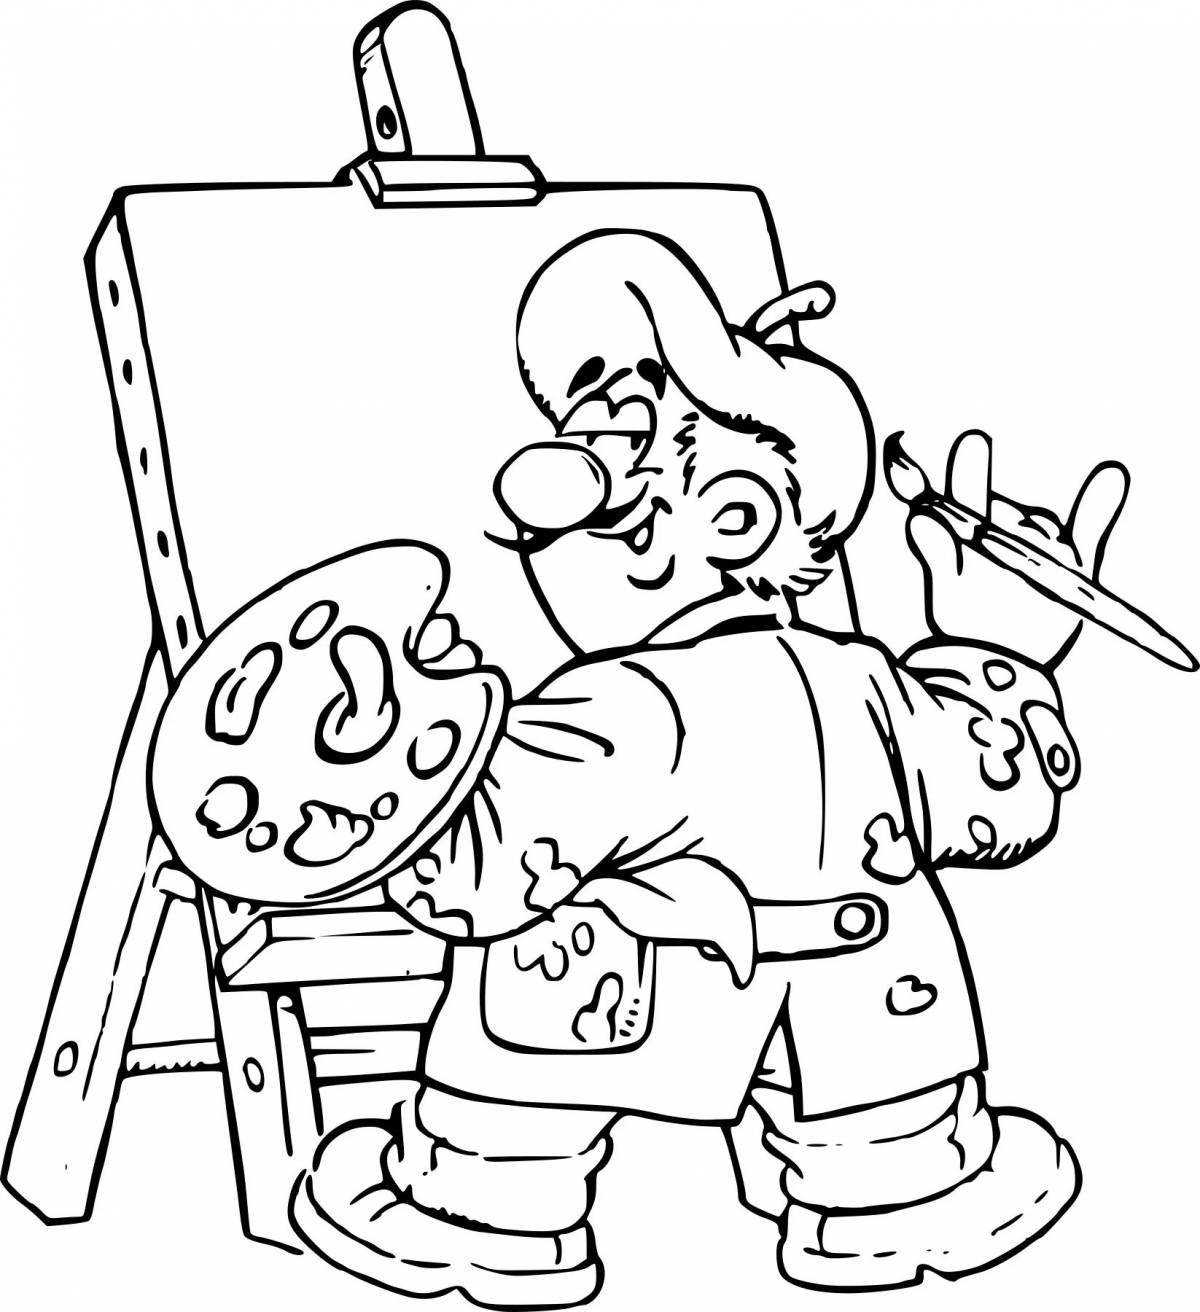 Joyful coloring artist for kids